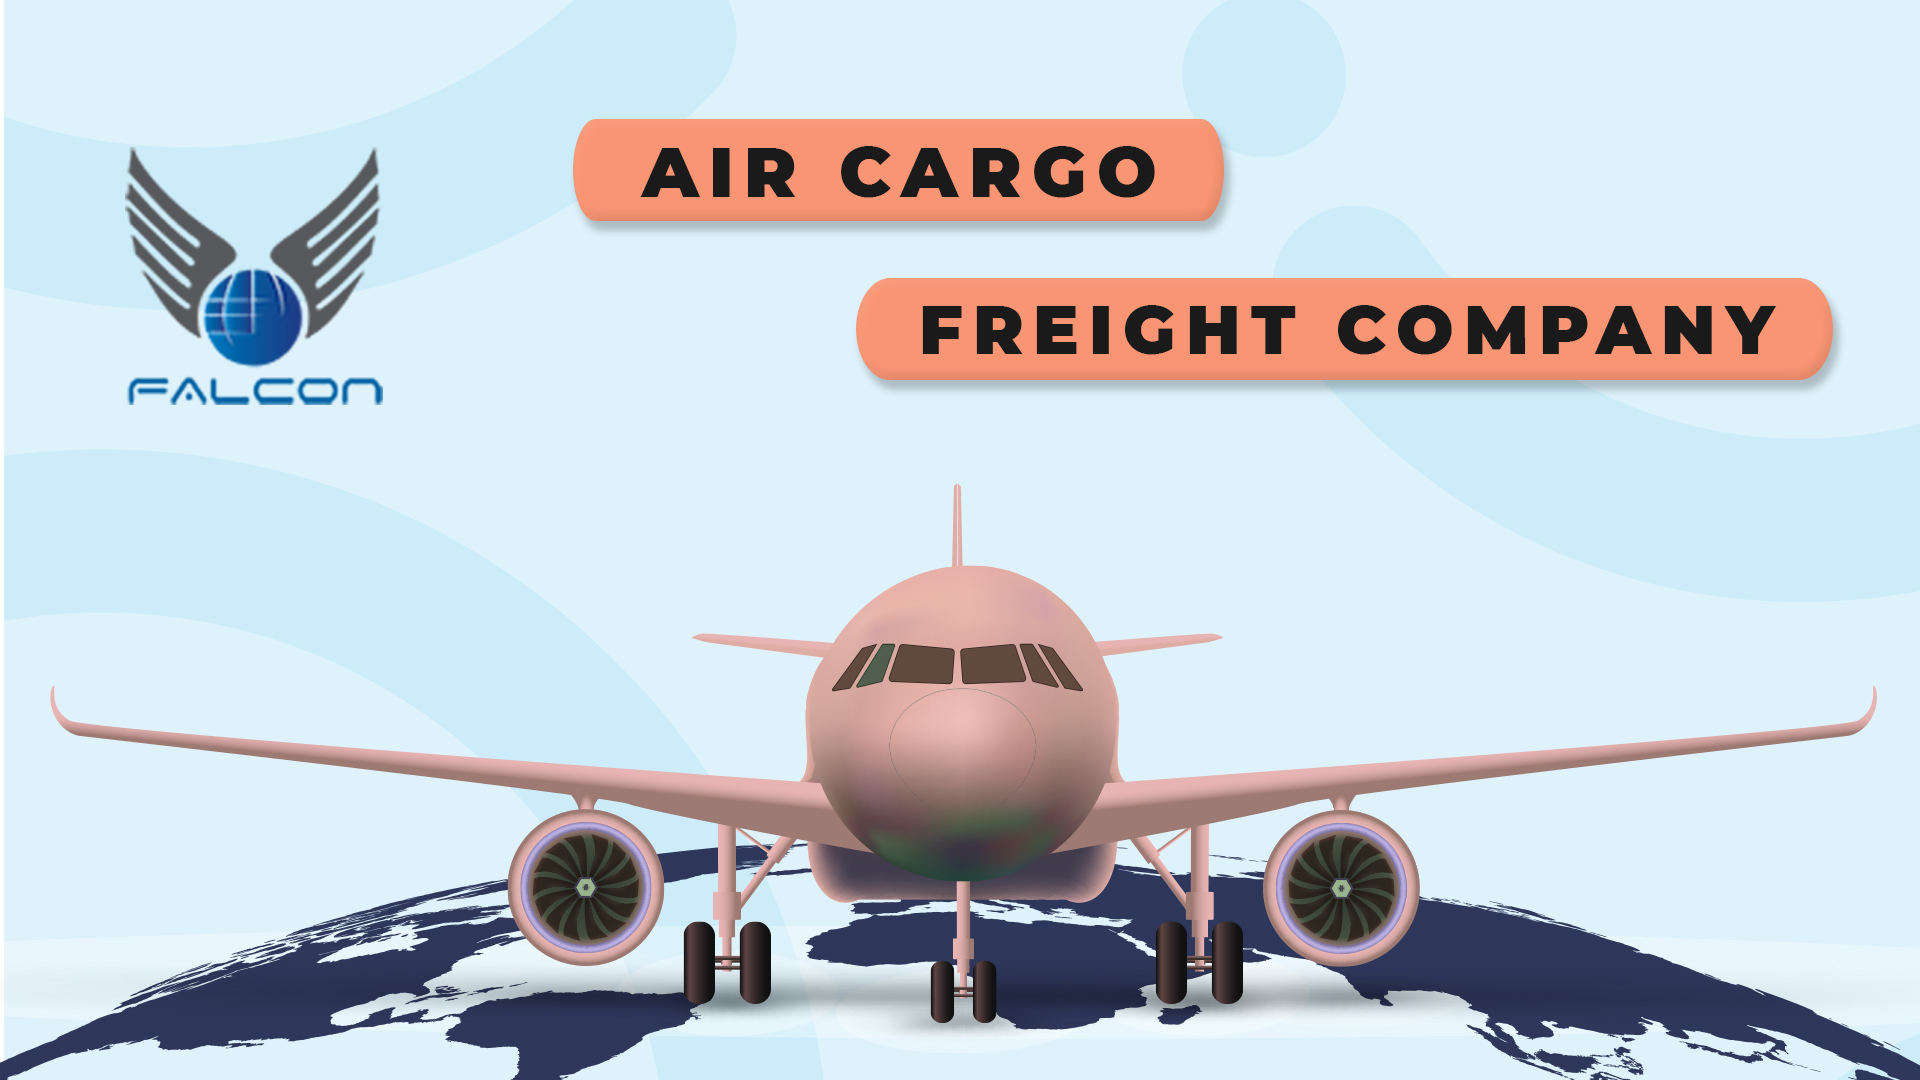 Air Cargo Freight Company